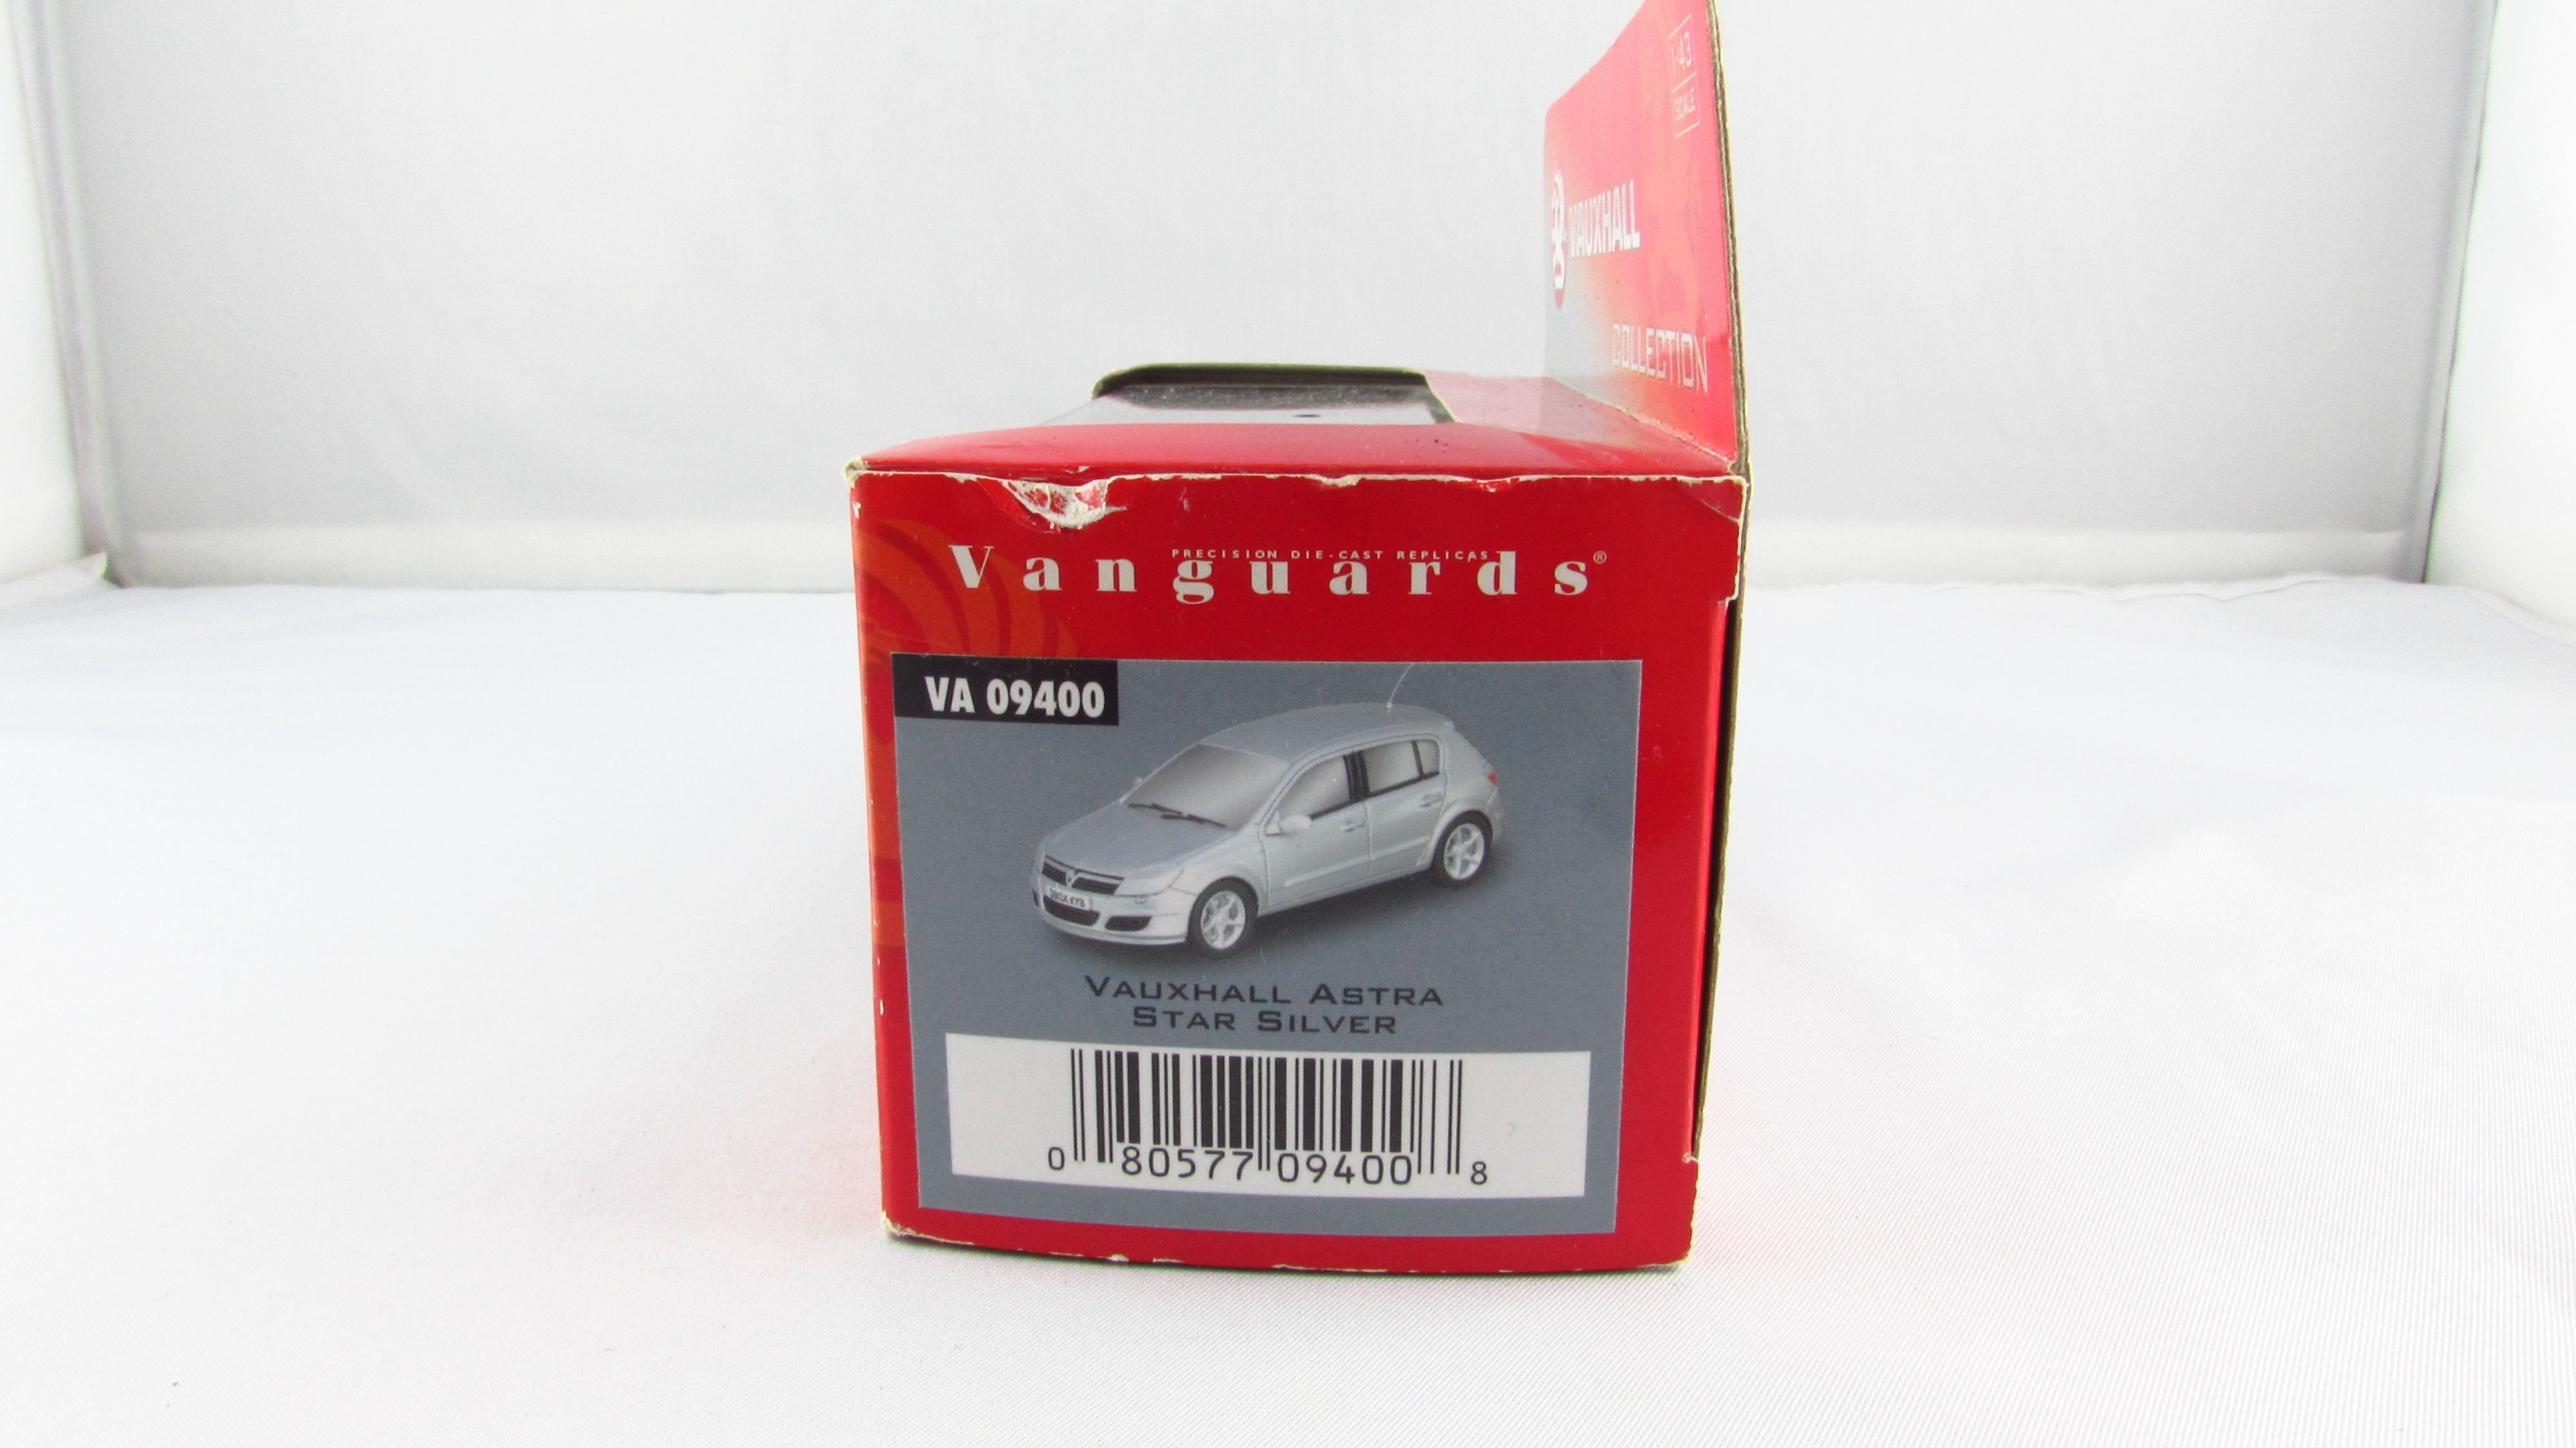 LEEDO - Vauxhall Collection - Astra Star Silver Model Samochód 1:43